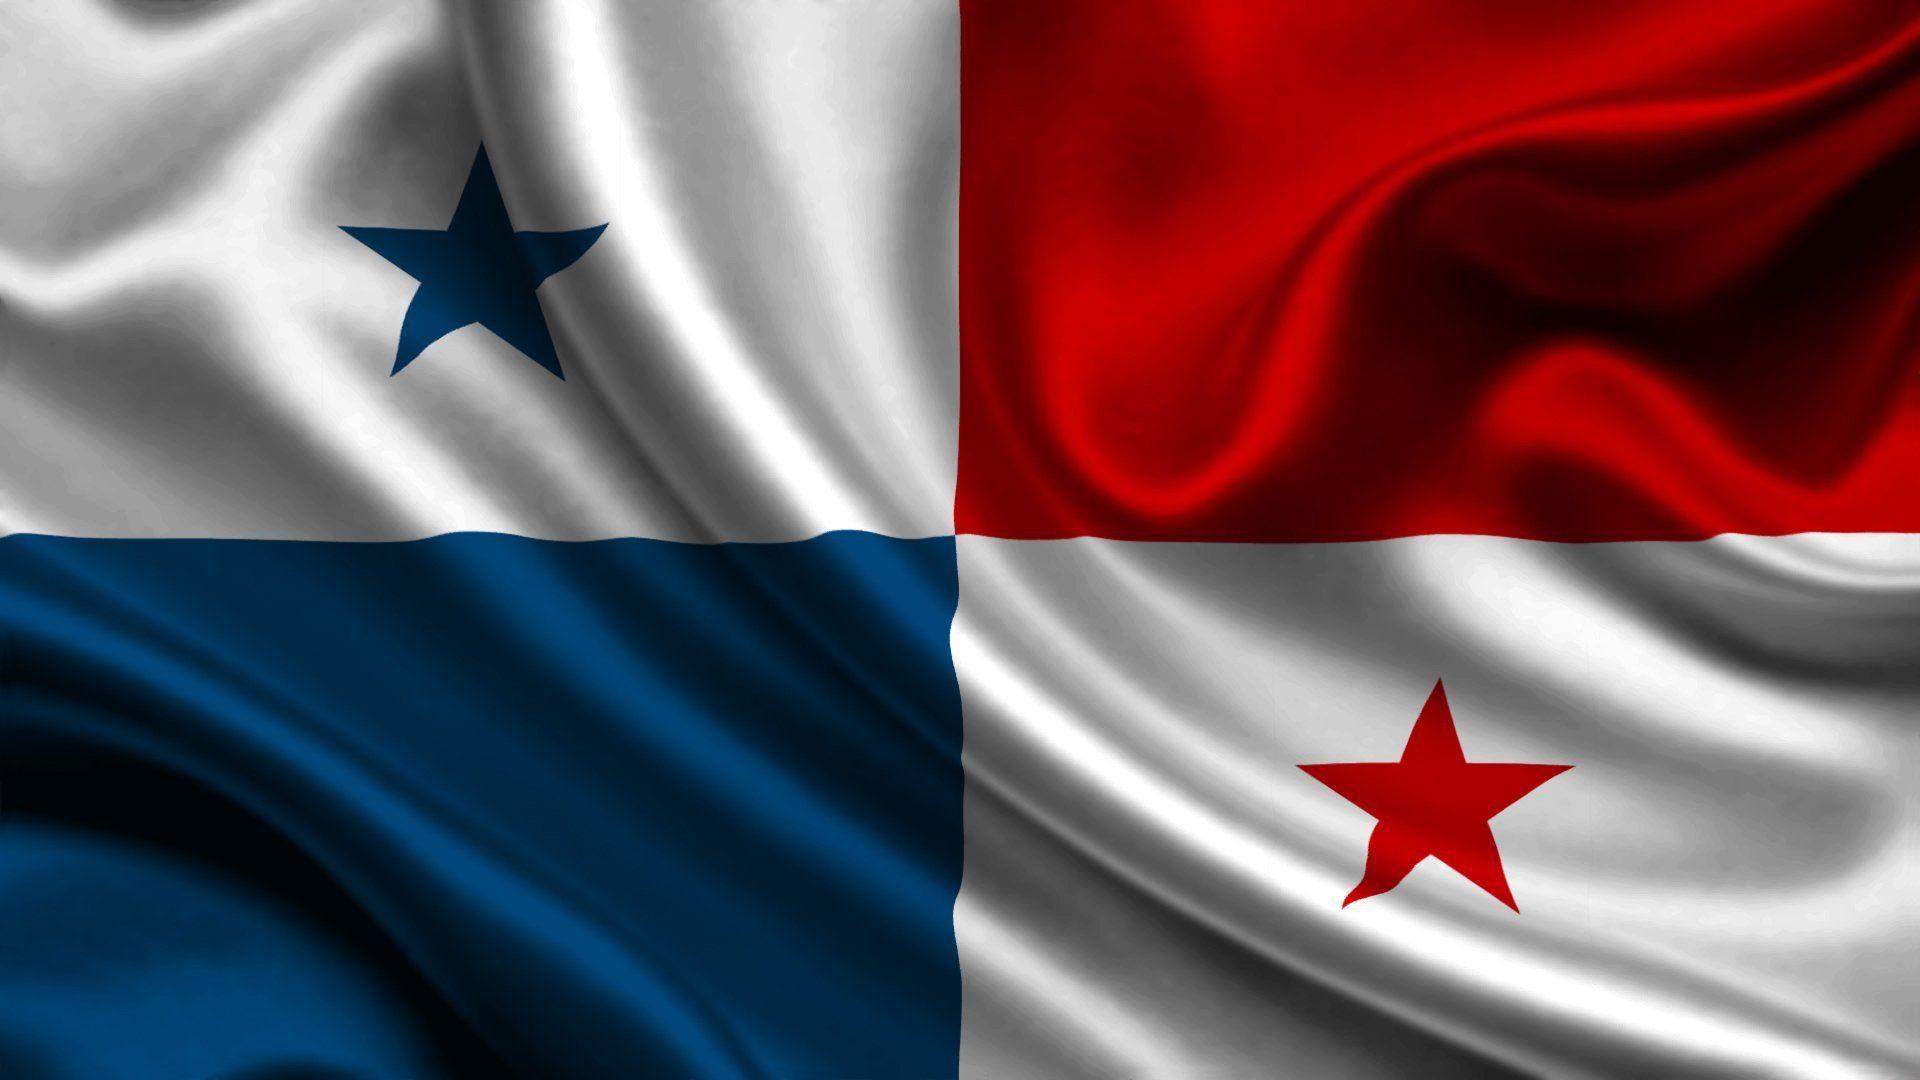 Panama Flag hd Image & Wallpapers free download